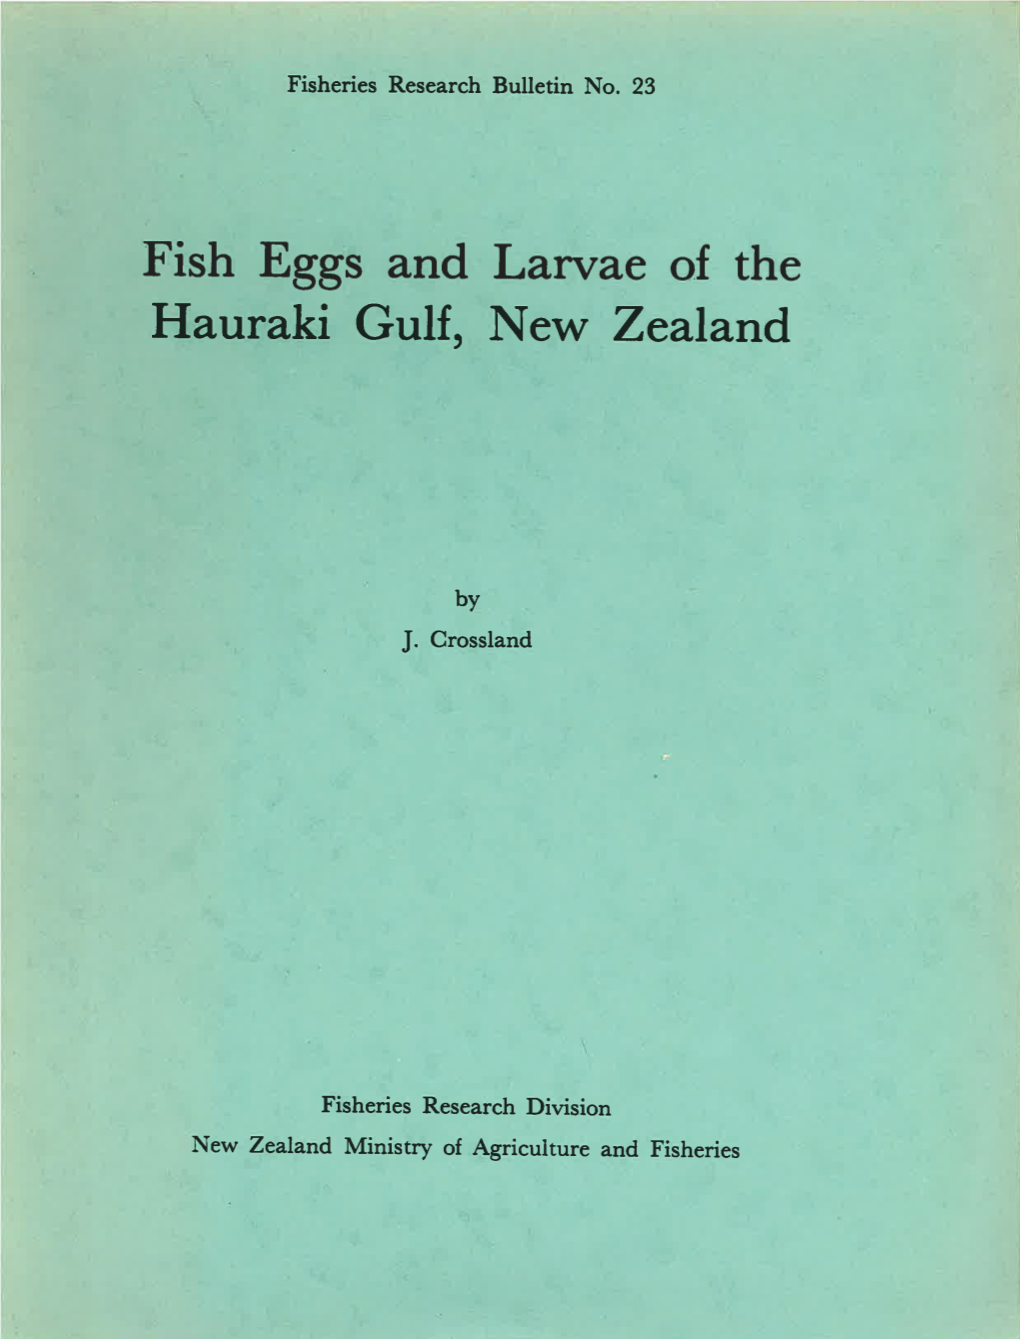 Fish Eggr and Larvae of the Hauraki Gulf, New Zealand